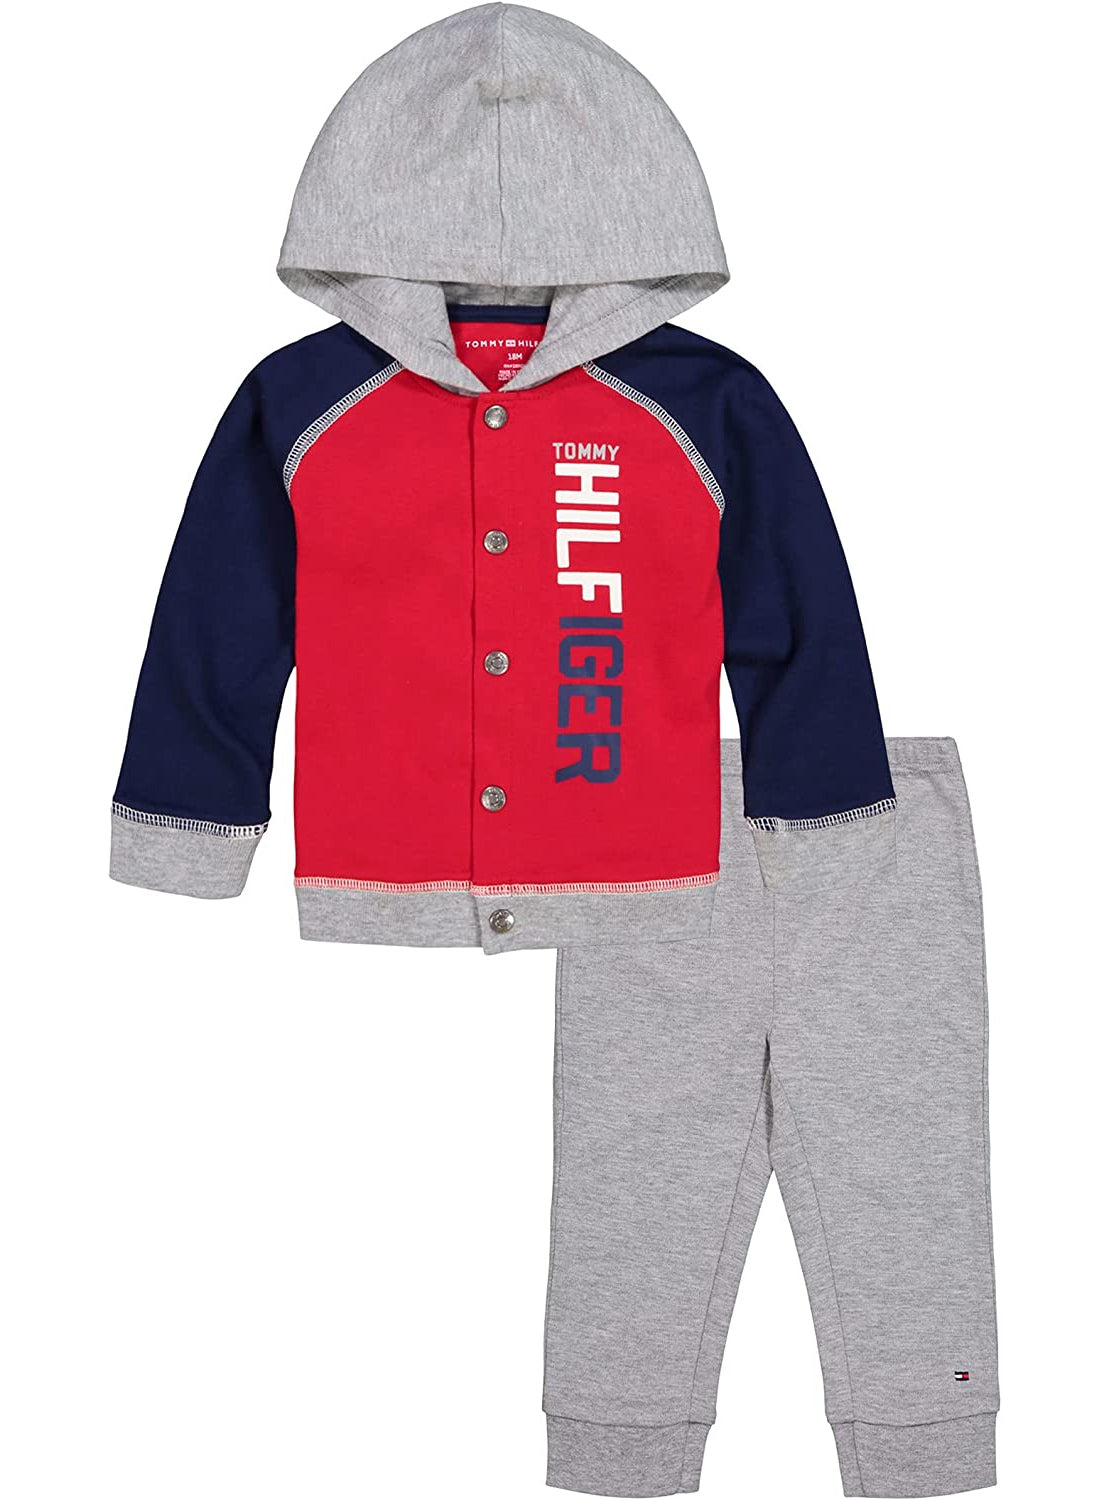 Tommy Hilfiger Boys 12-24 Months 3-Piece Jacket Set